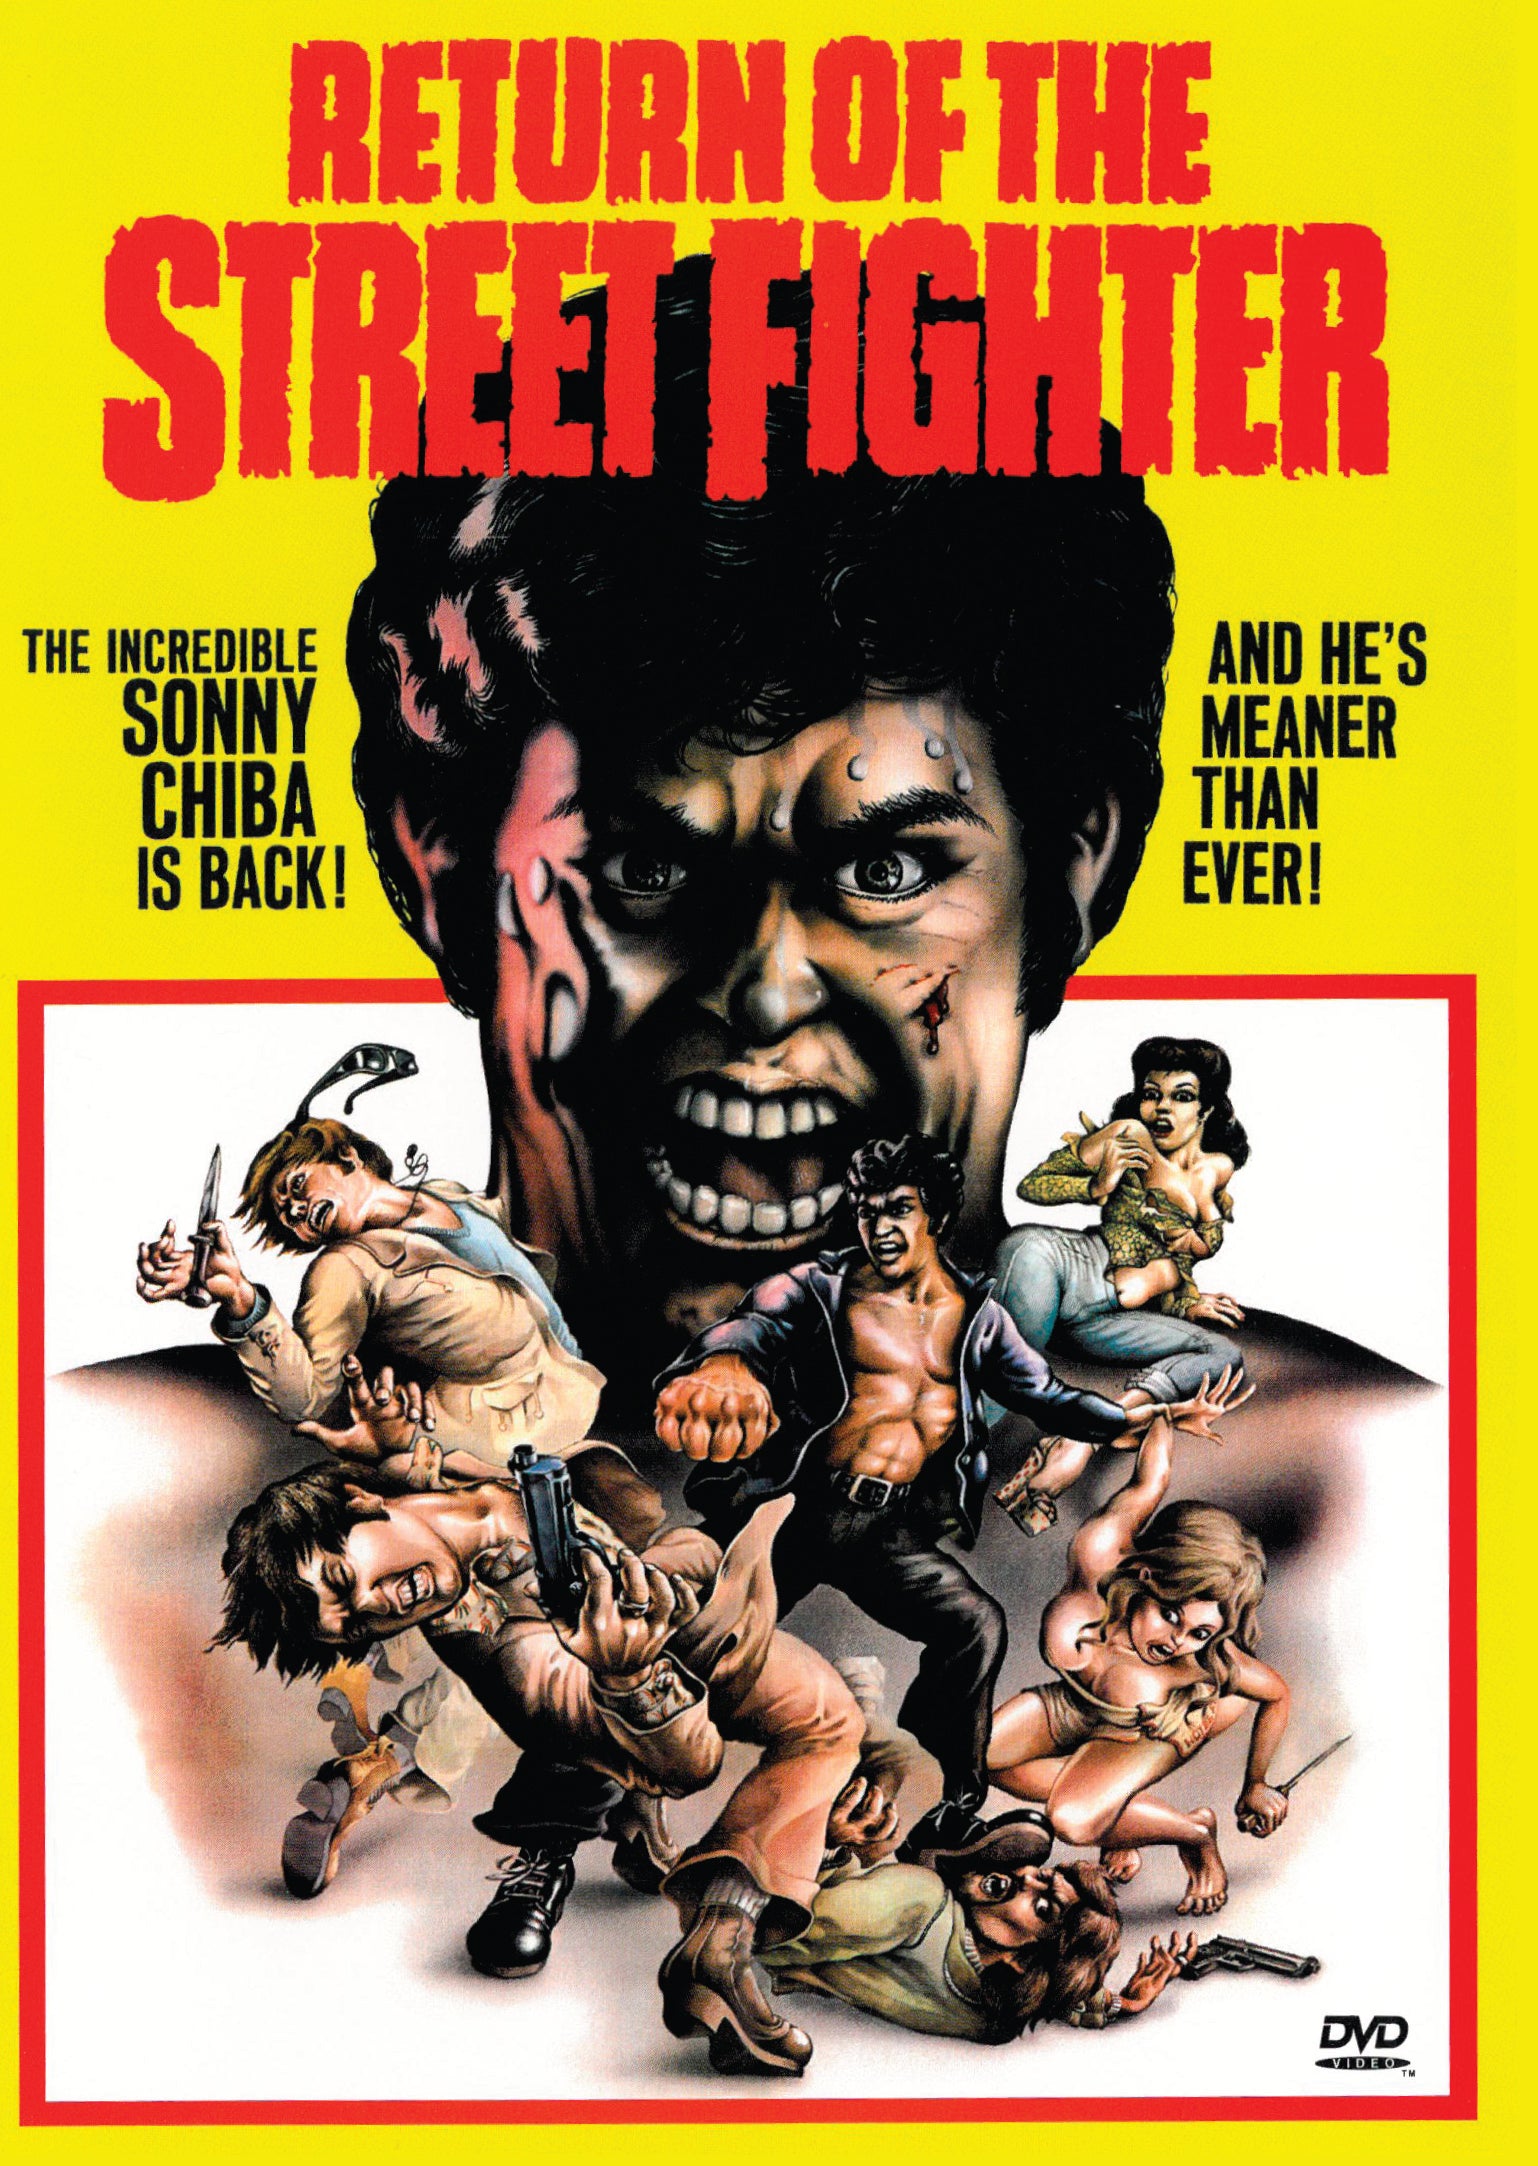 RETURN OF THE STREET FIGHTER DVD